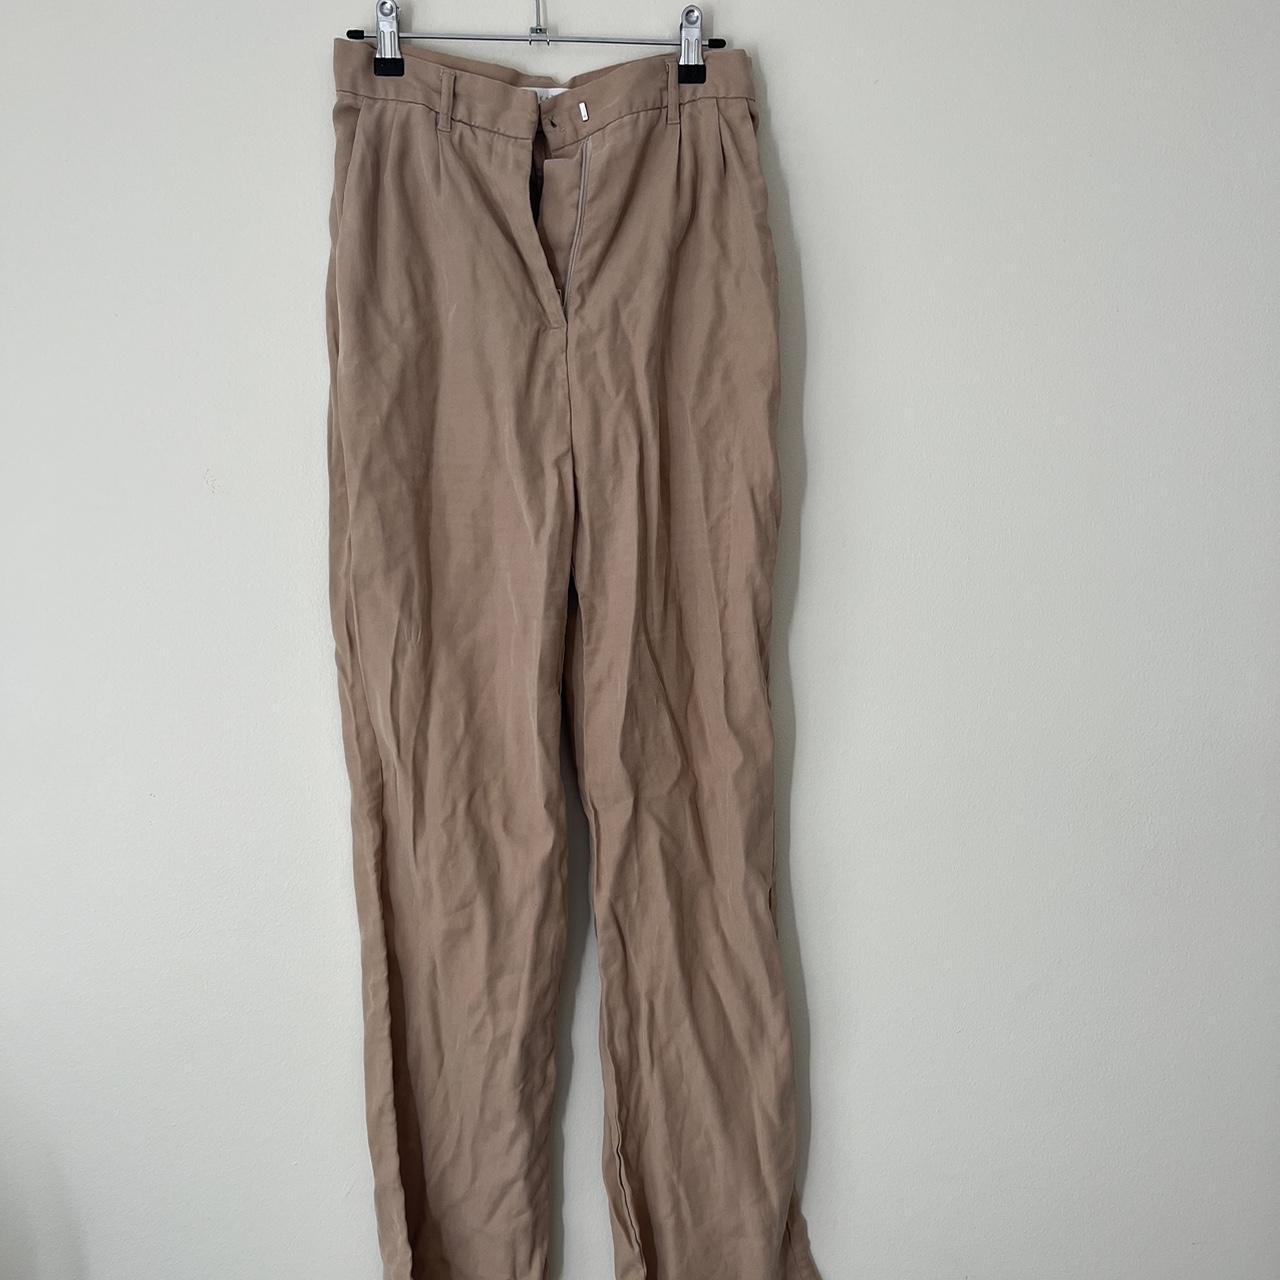 Kookai Montmatre Pants in Tan in Size 34 #kookai... - Depop